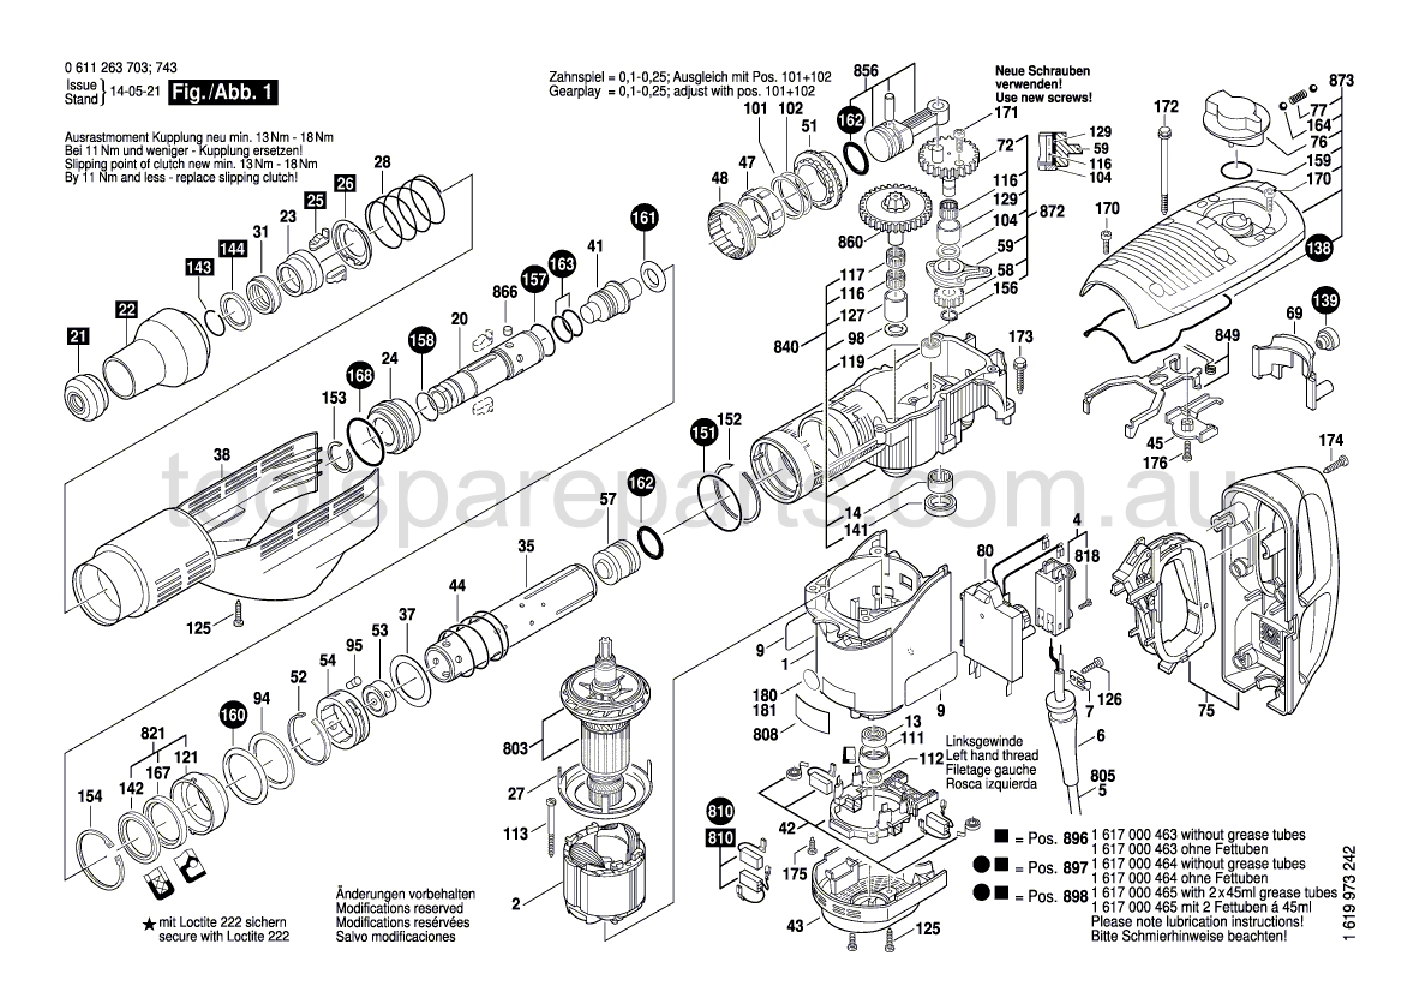 Bosch GBH 7-46 DE 0611263737  Diagram 1